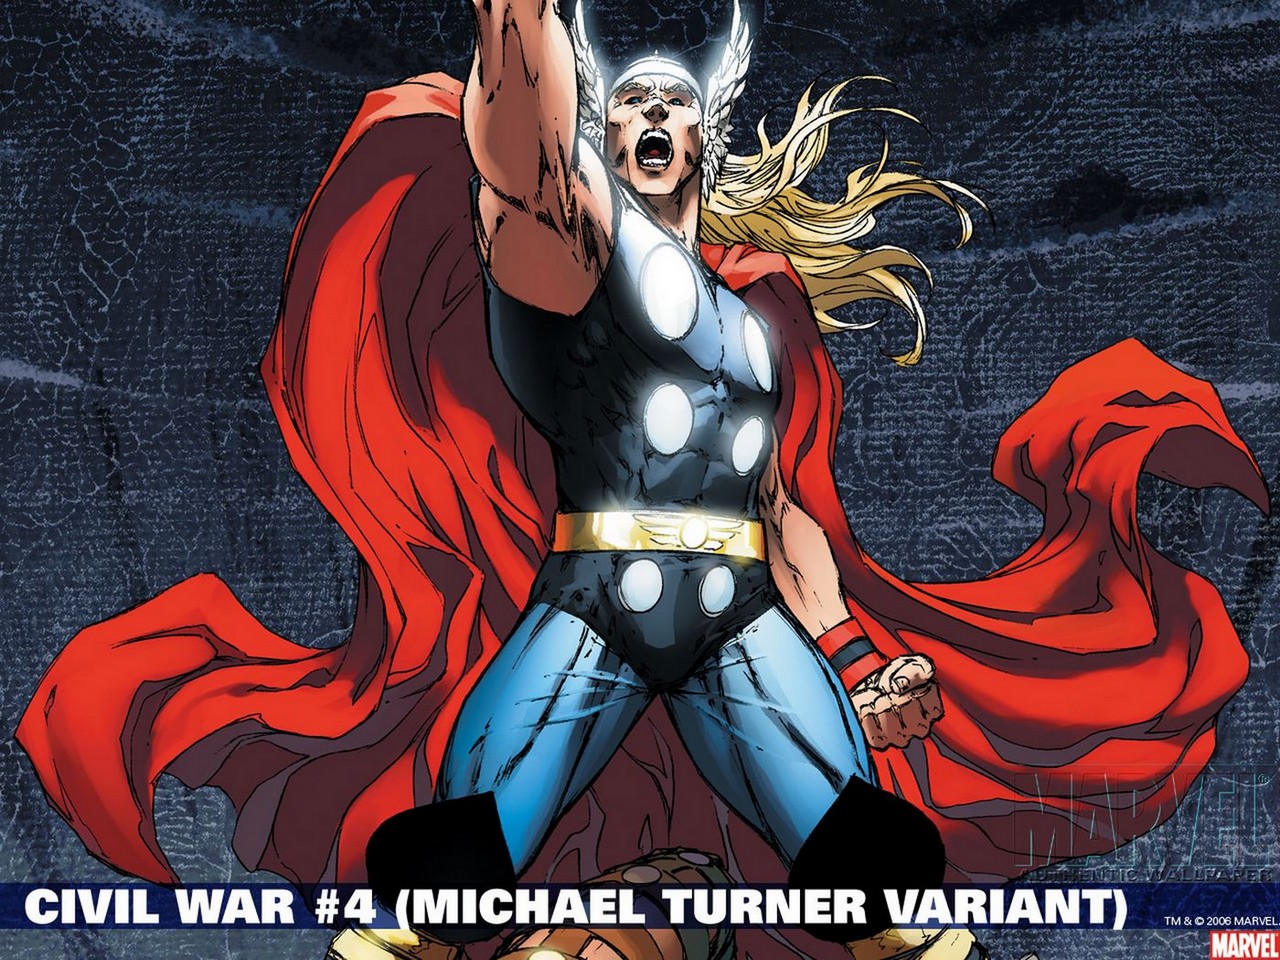 Thor Desktop Wallpaper Marvel